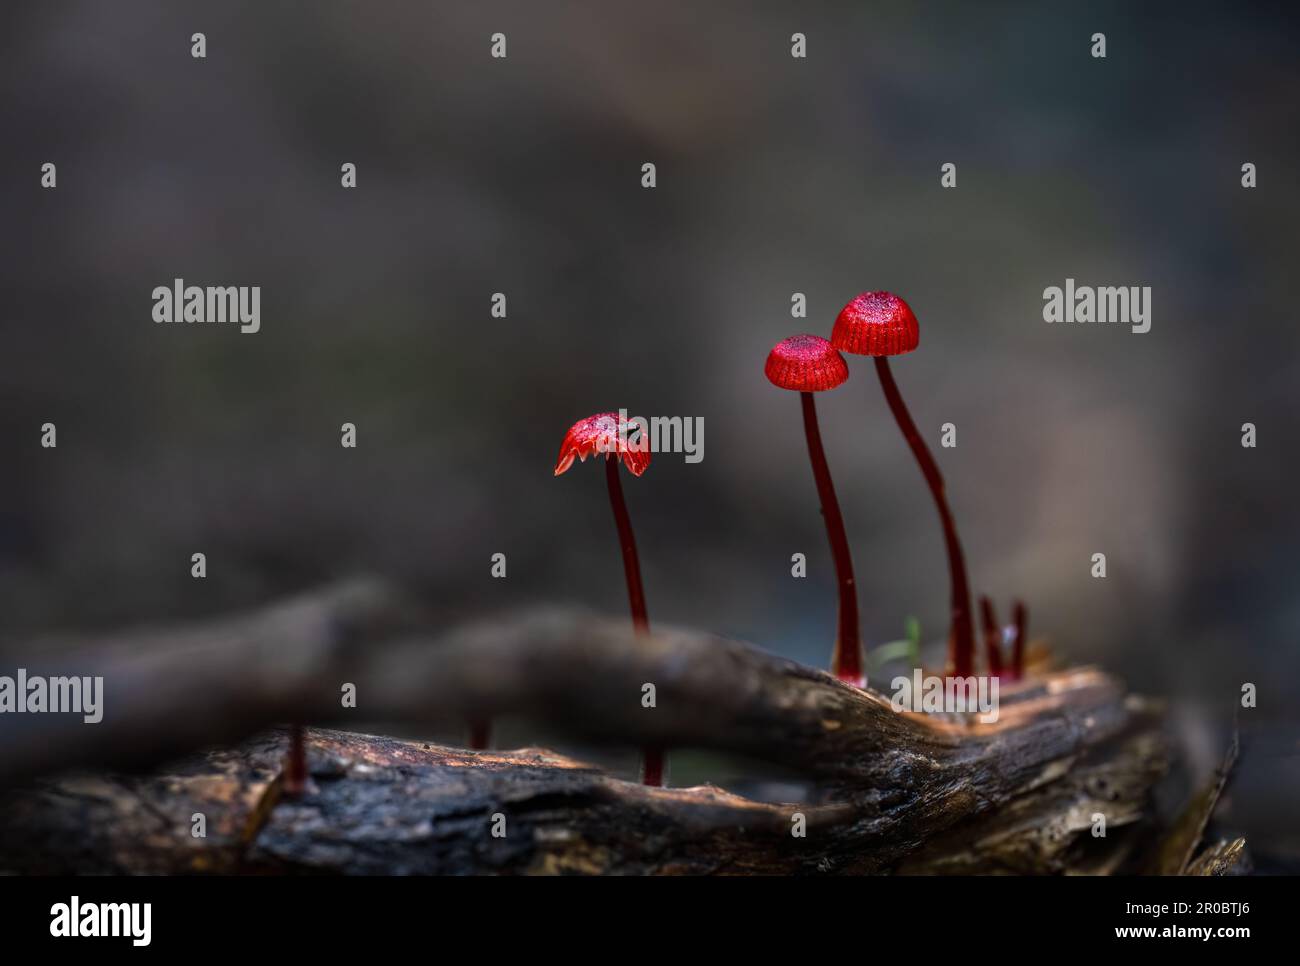 Ruby Bonnet (Cruentomycena viscidocruenta), tiny bright red mushrooms found in the forest floor in Auckland. Stock Photo